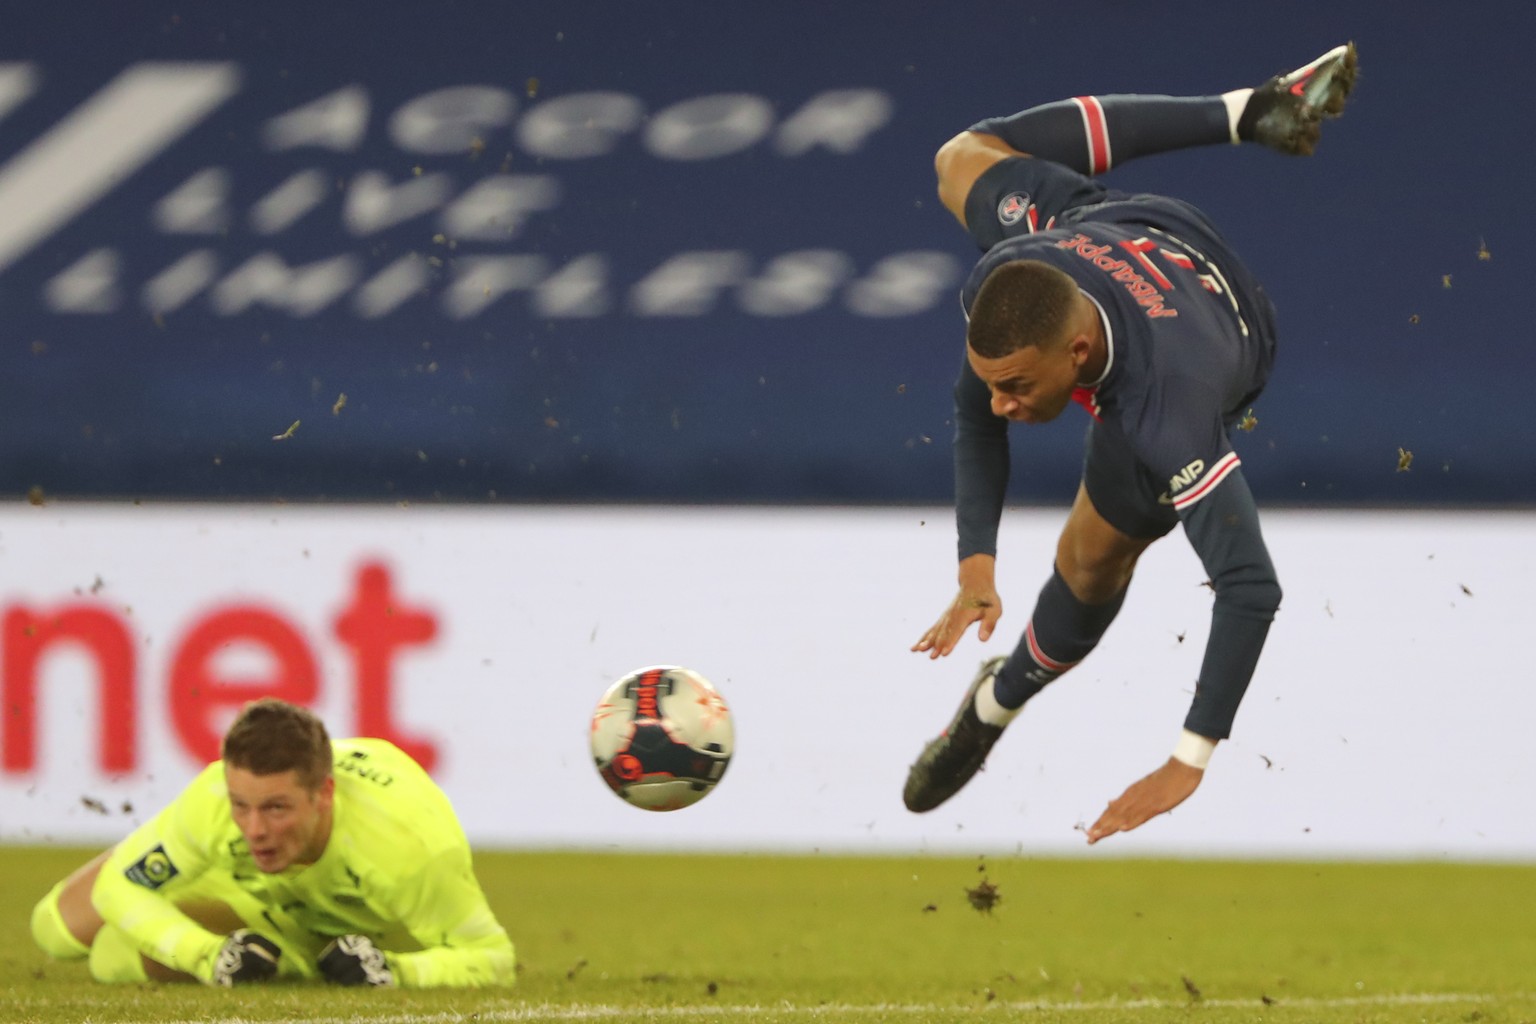 Spektakulär fliegt Weltmeister Kylian Mbappé nach dem Foul durch die Luft.